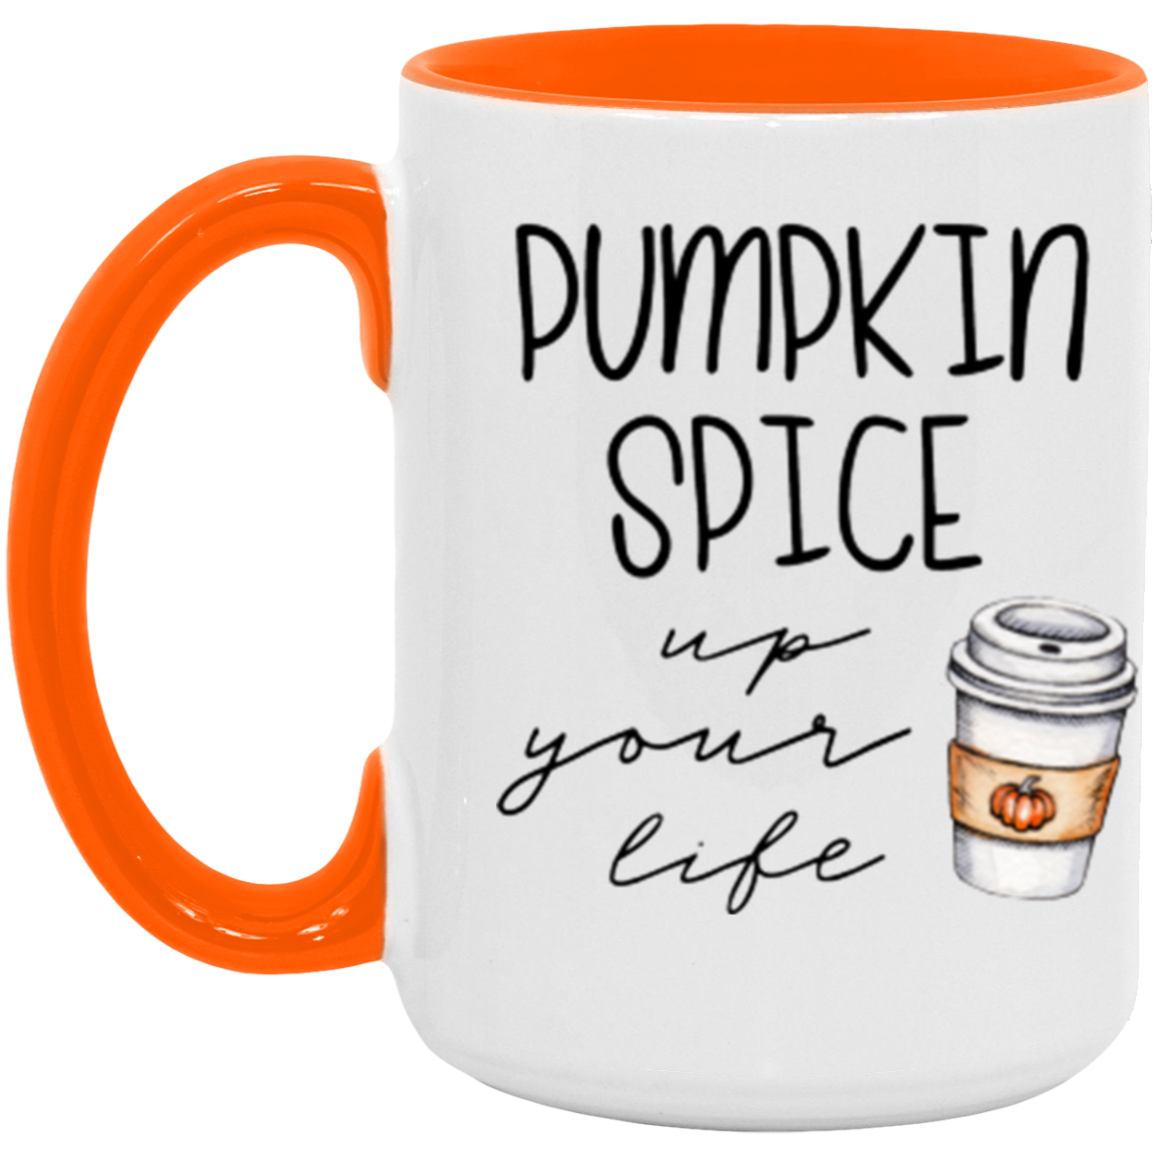 Pumpkin Spice Up Your Life Mug